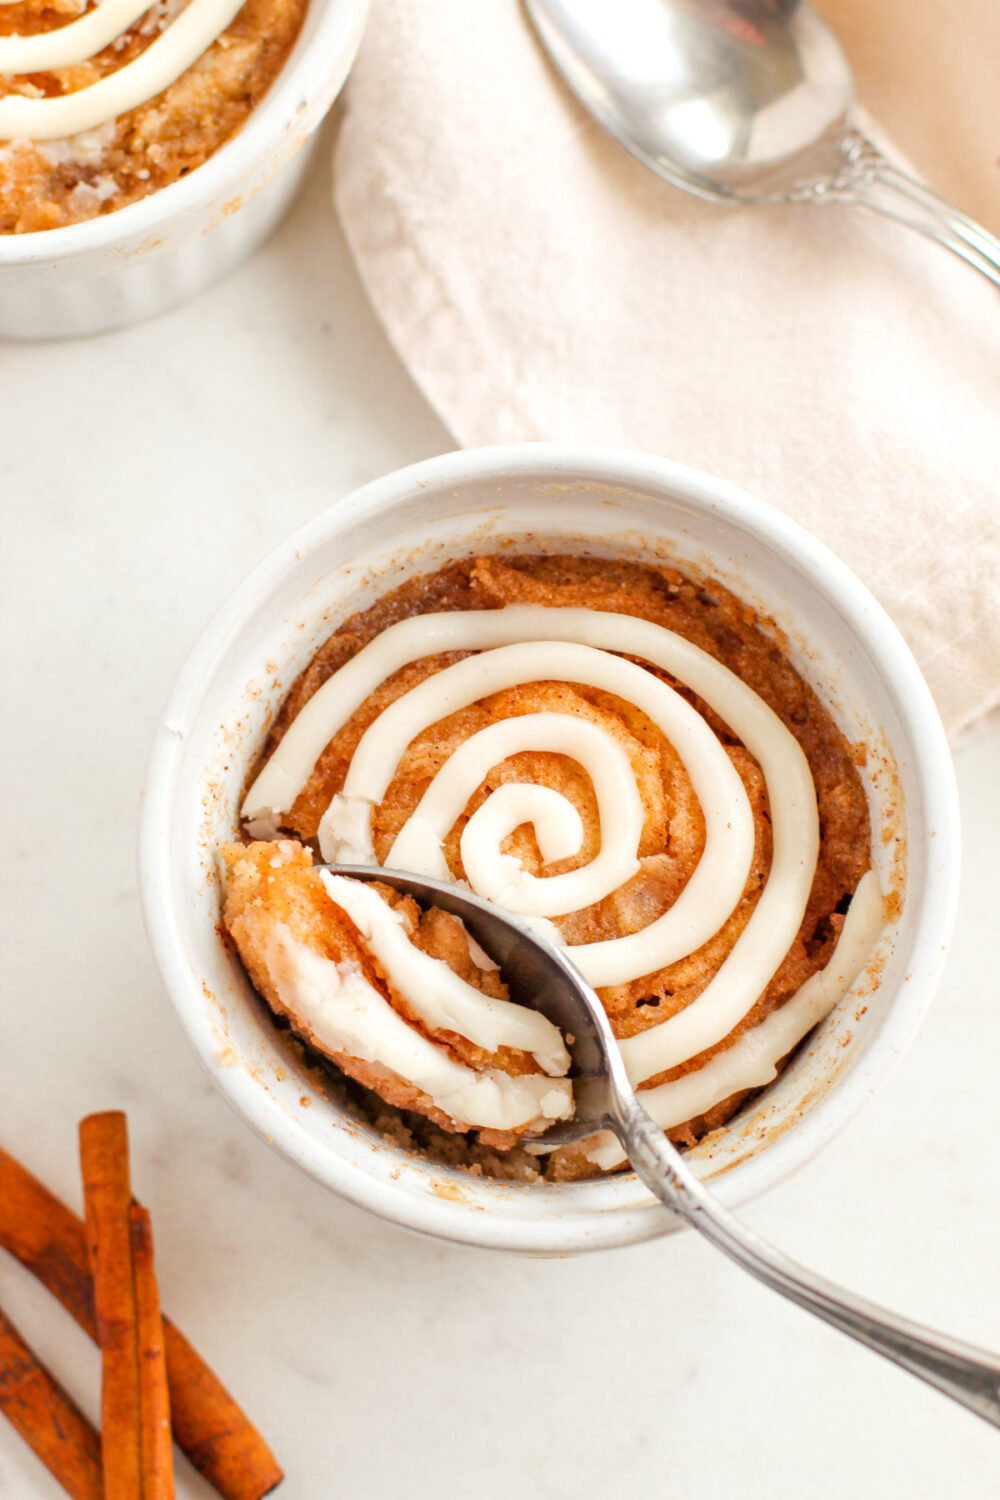 A spoon in a cinnamon roll cake.